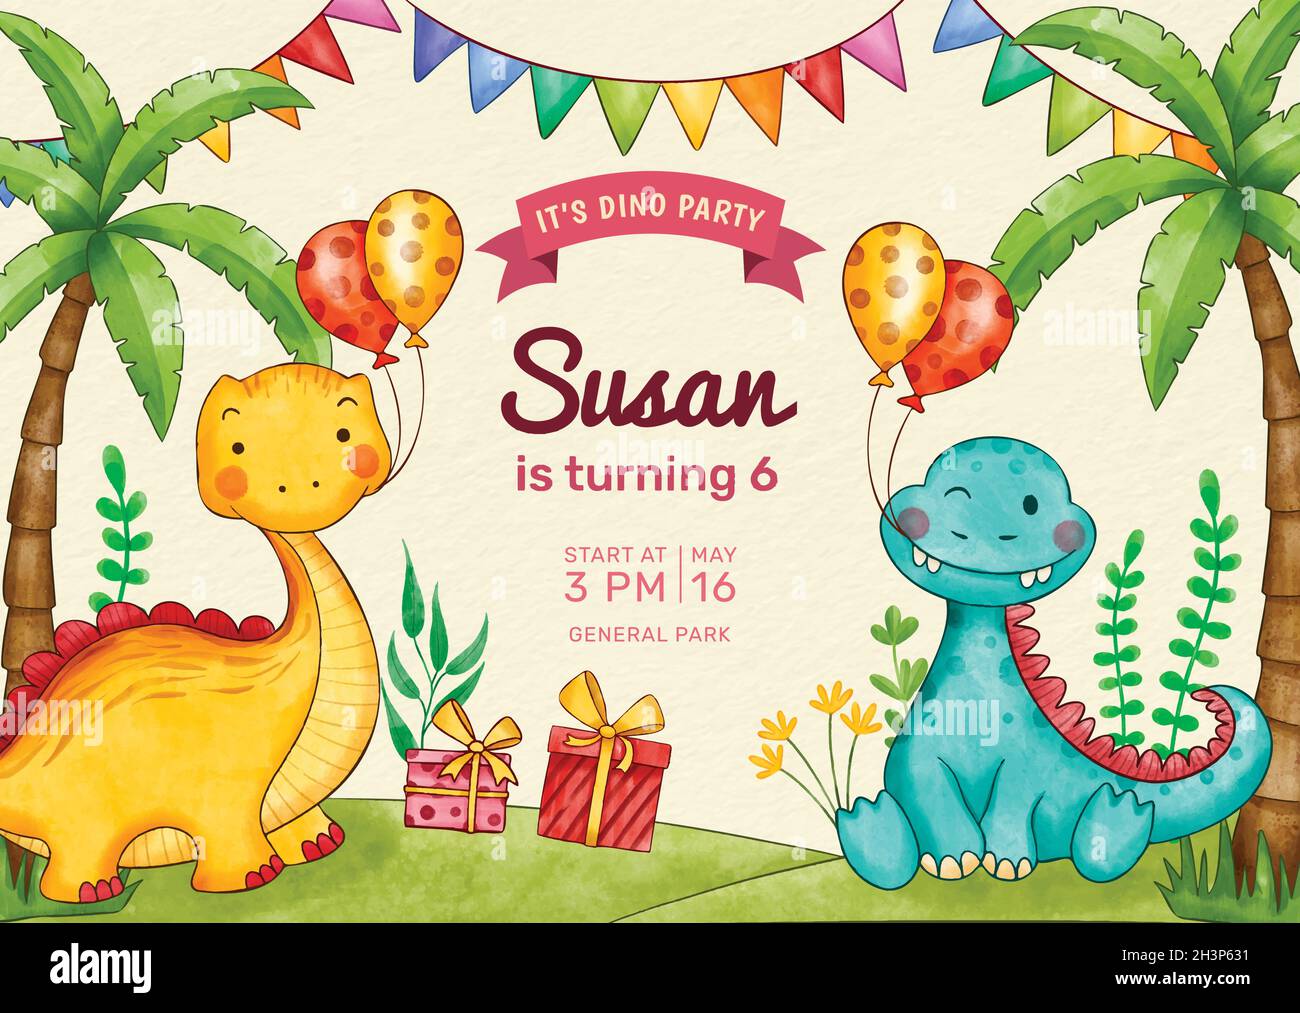 Watercolor Dinosaur Girl Birthday Invitation 